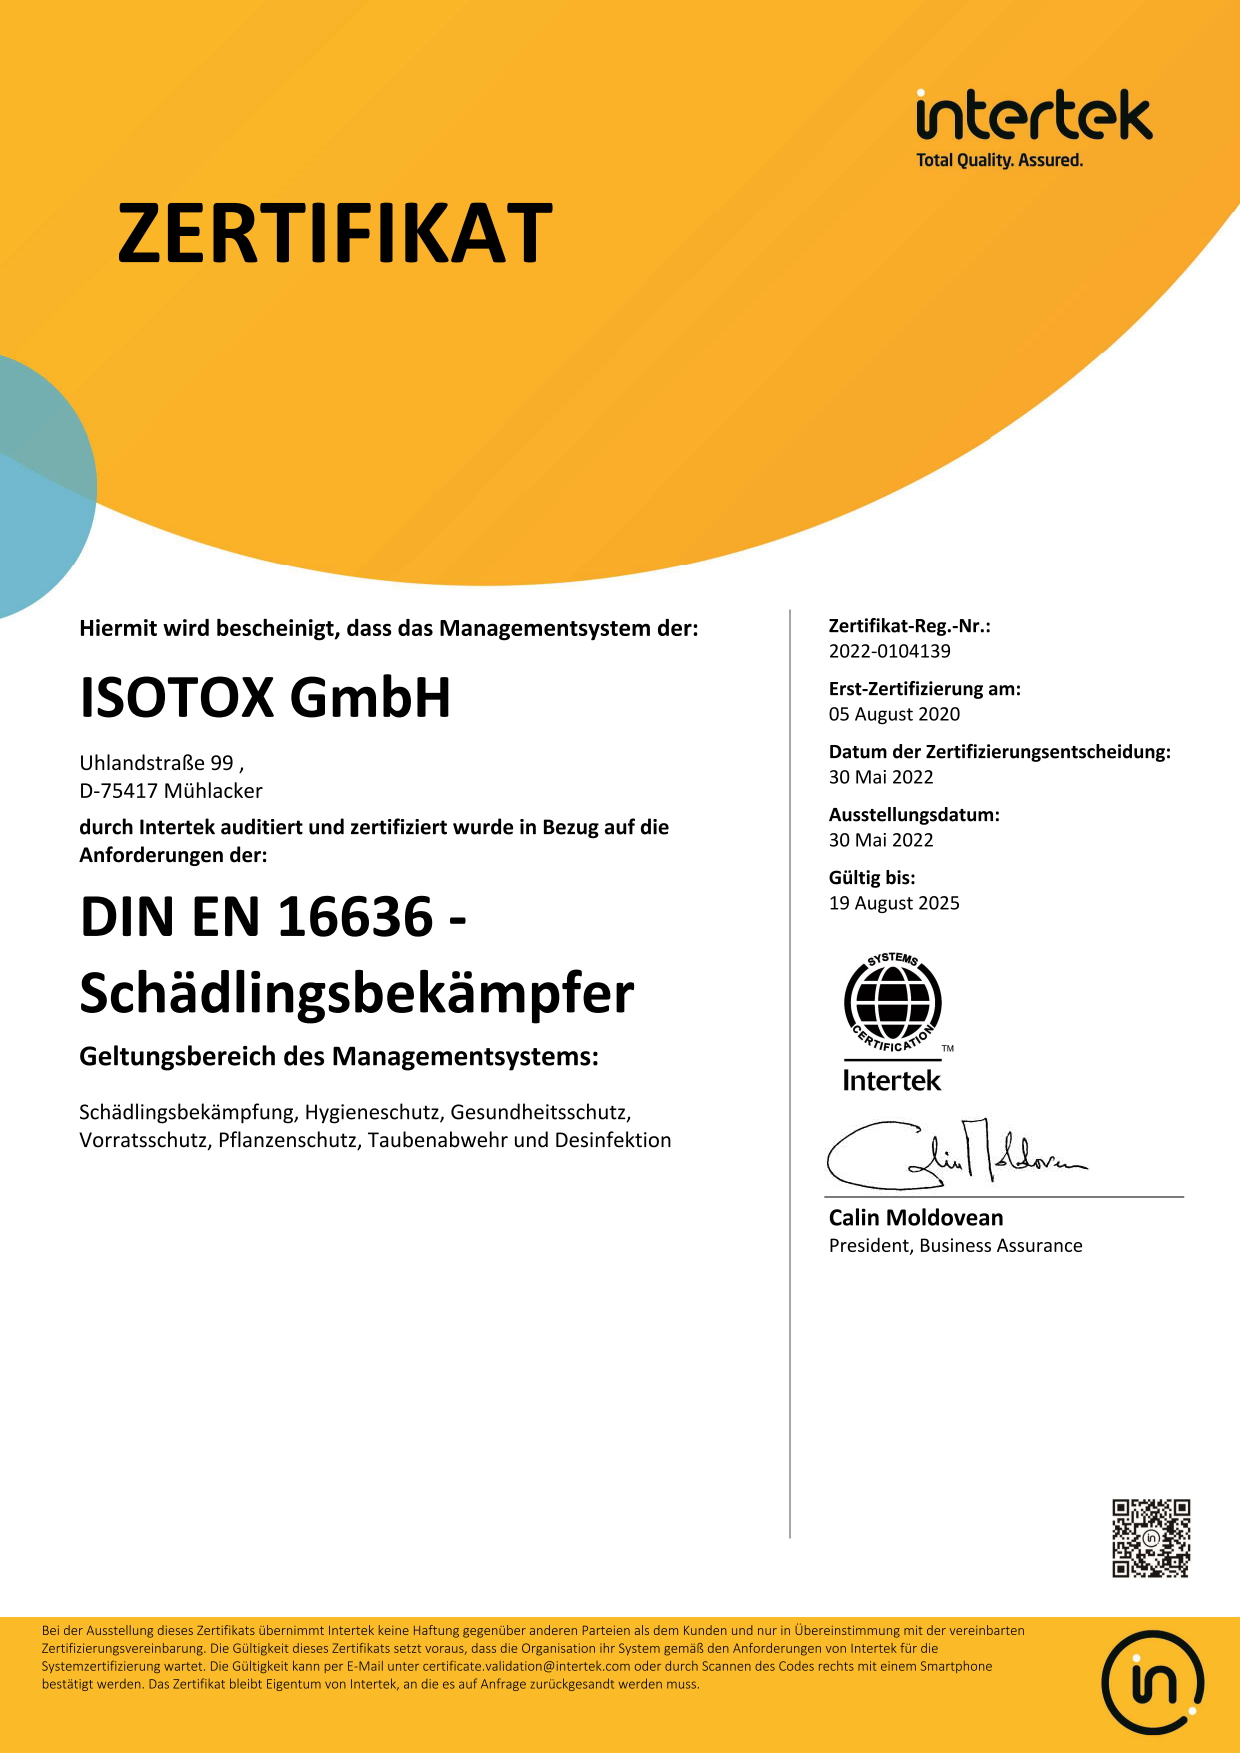 Isotox GmbH - DIN EN ISO 9001:2015